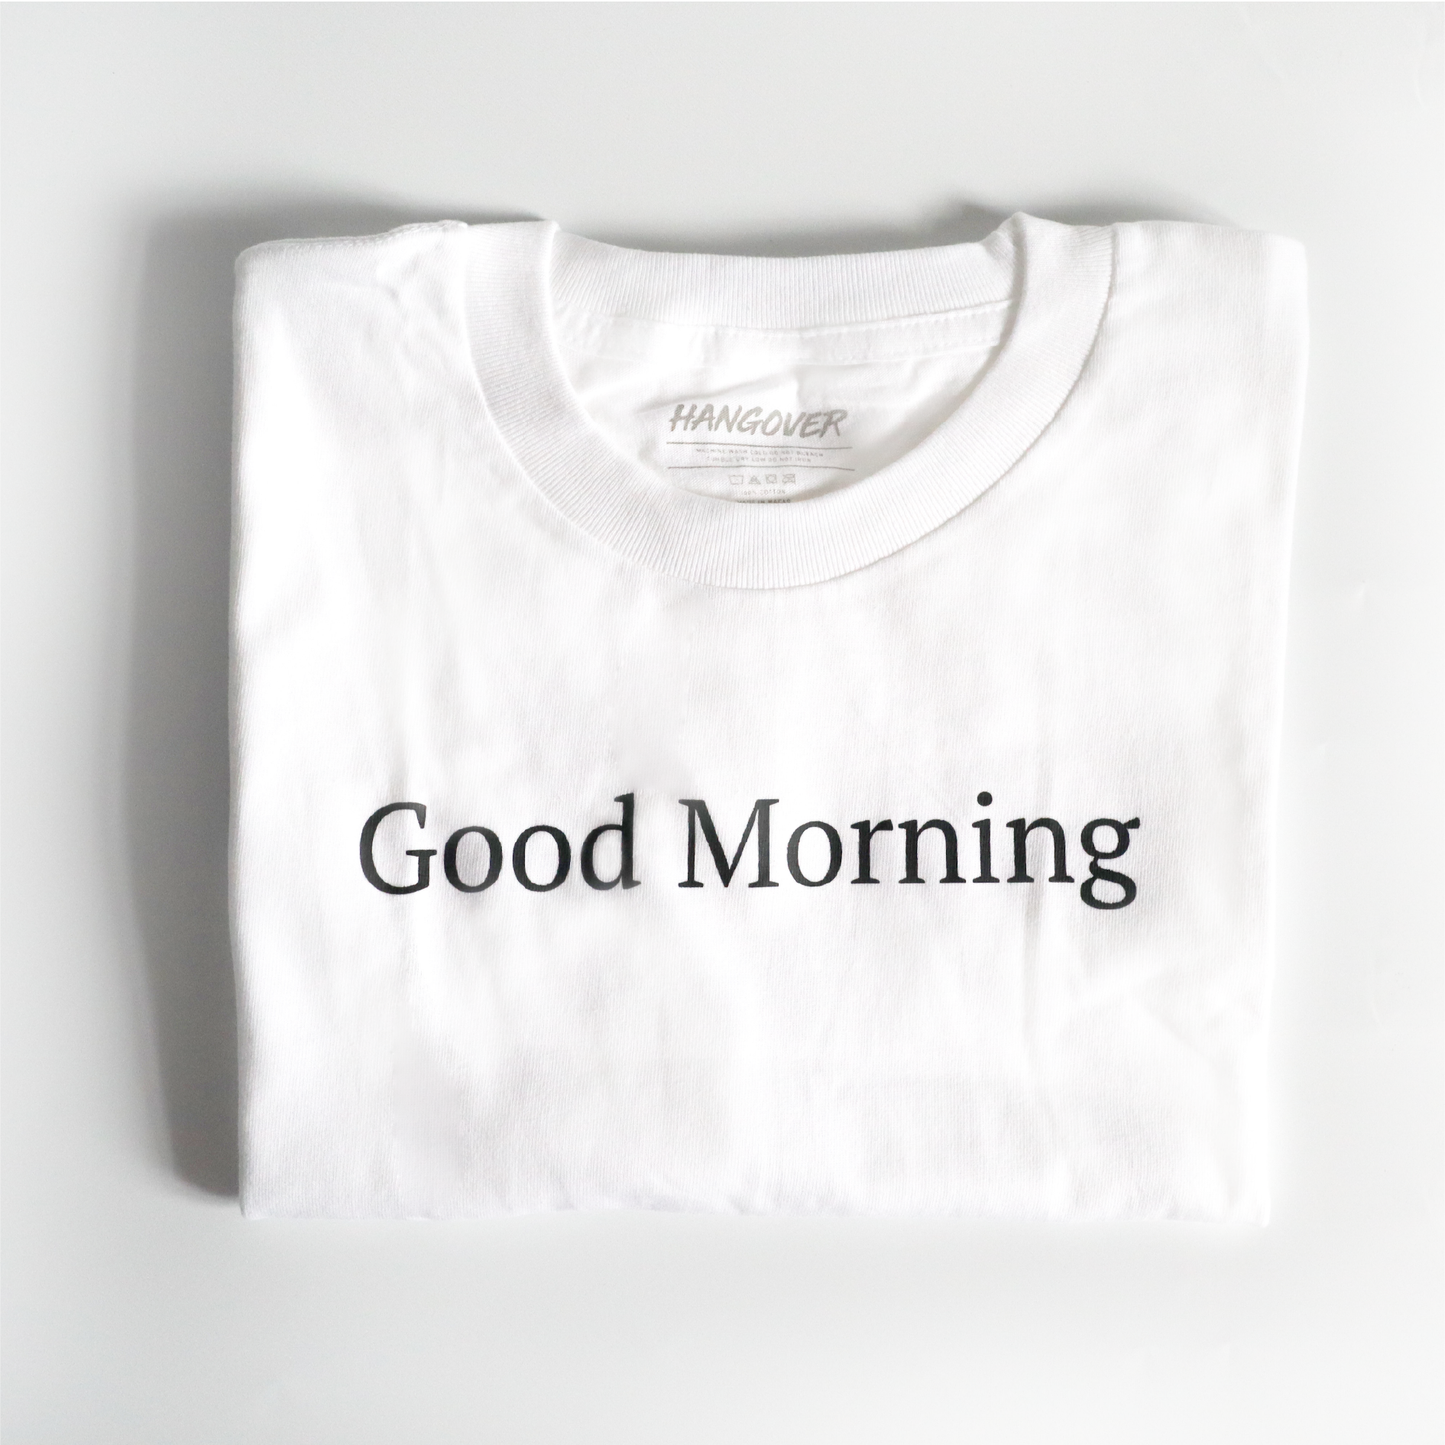 GOOD MORNING - WHITE